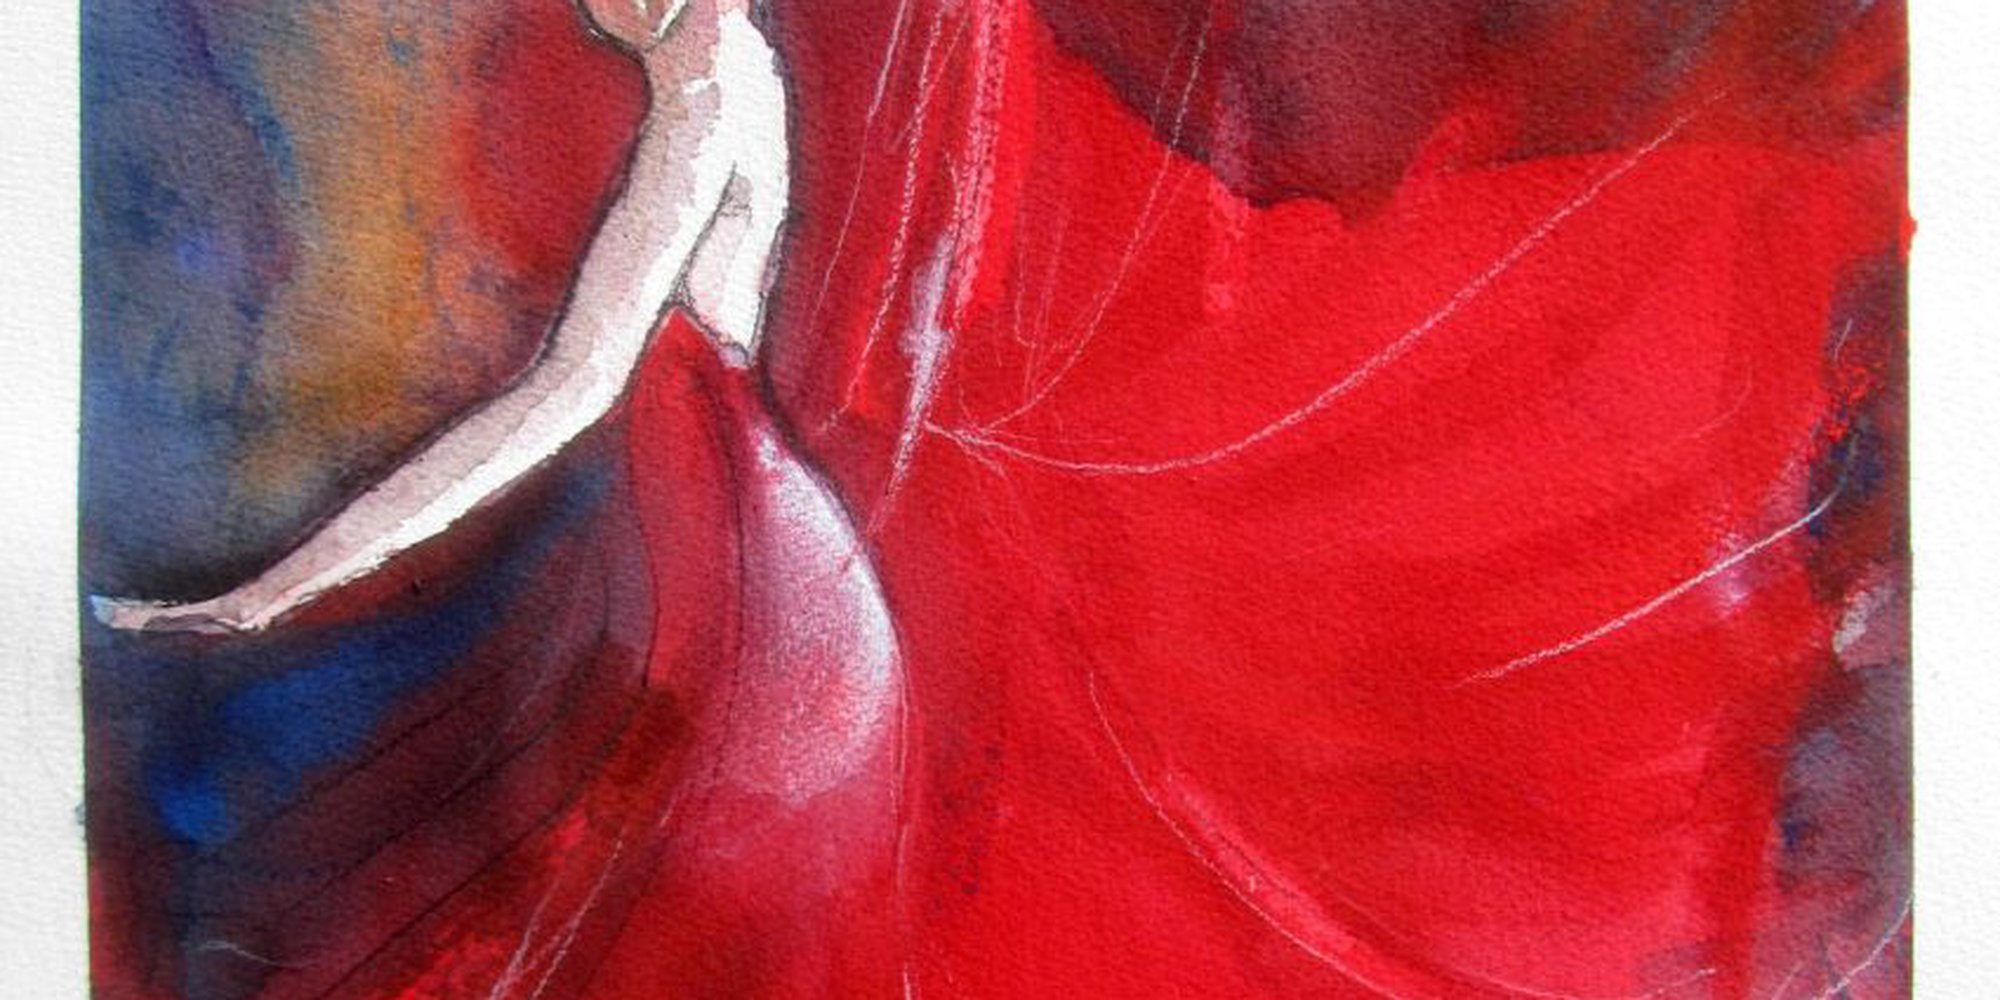 Art of the Day: "Flamenco Fire , 2014" by Violeta Damjanovic-Behrendt